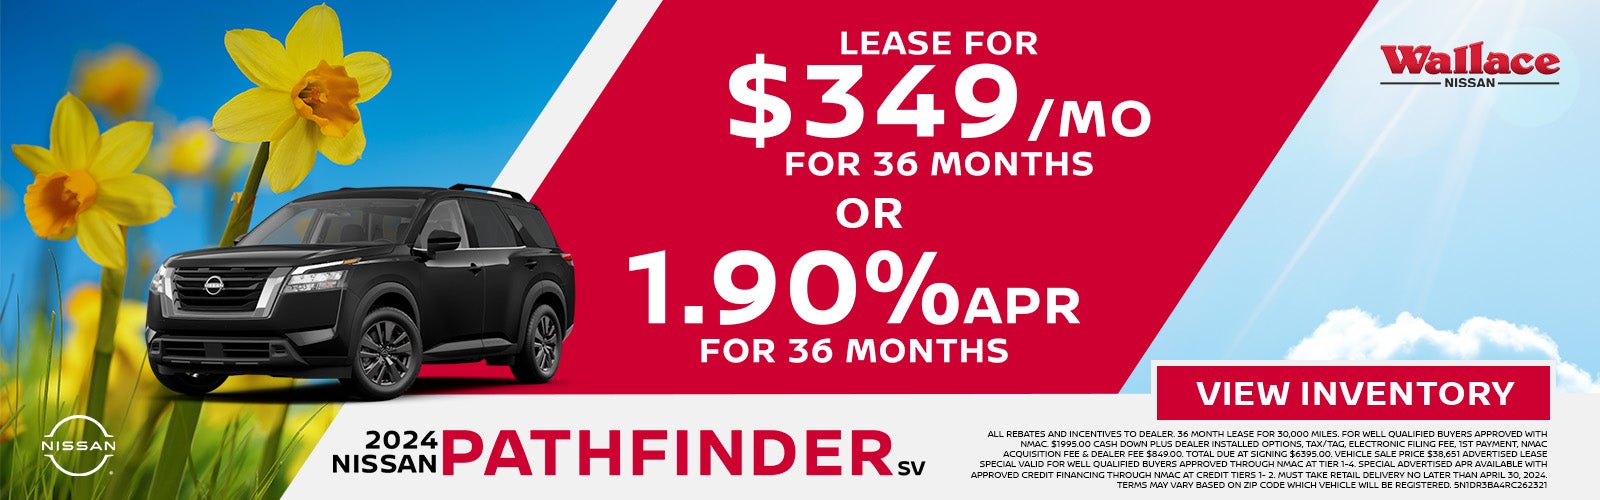 Nissan Pathfinder Special Offer